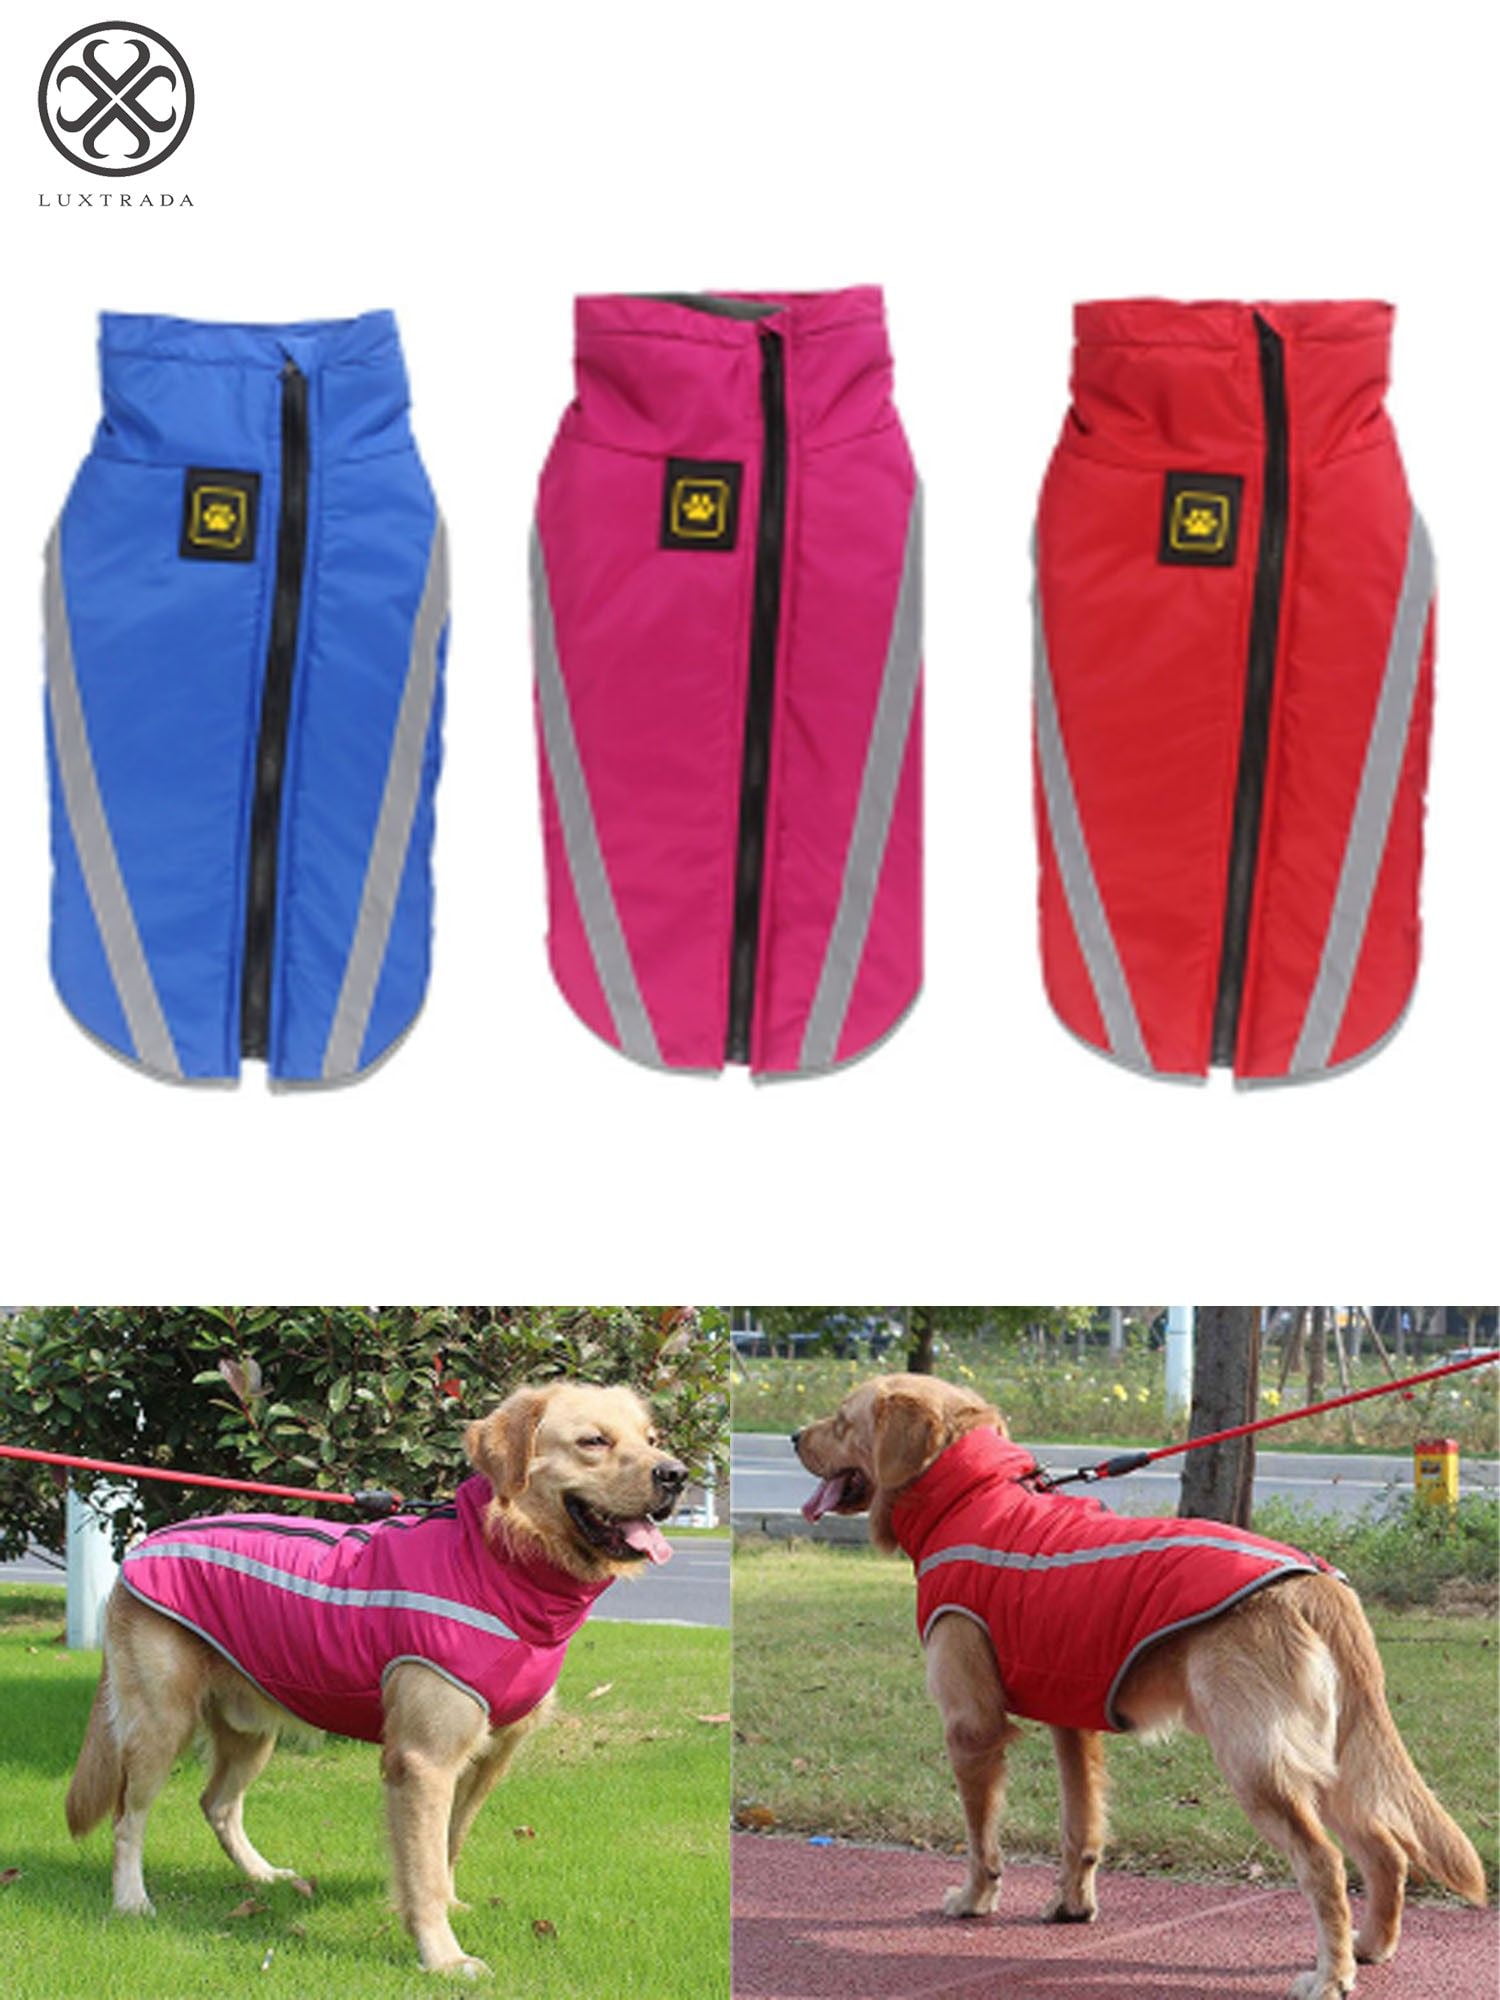 S, Red Idepet Dog Raincoat Hoodie with Collar Hole,Waterproof Dog Rain Poncho Reflective Dog Rain Jacket Windproof Hoodies for Small Medium Large Dogs